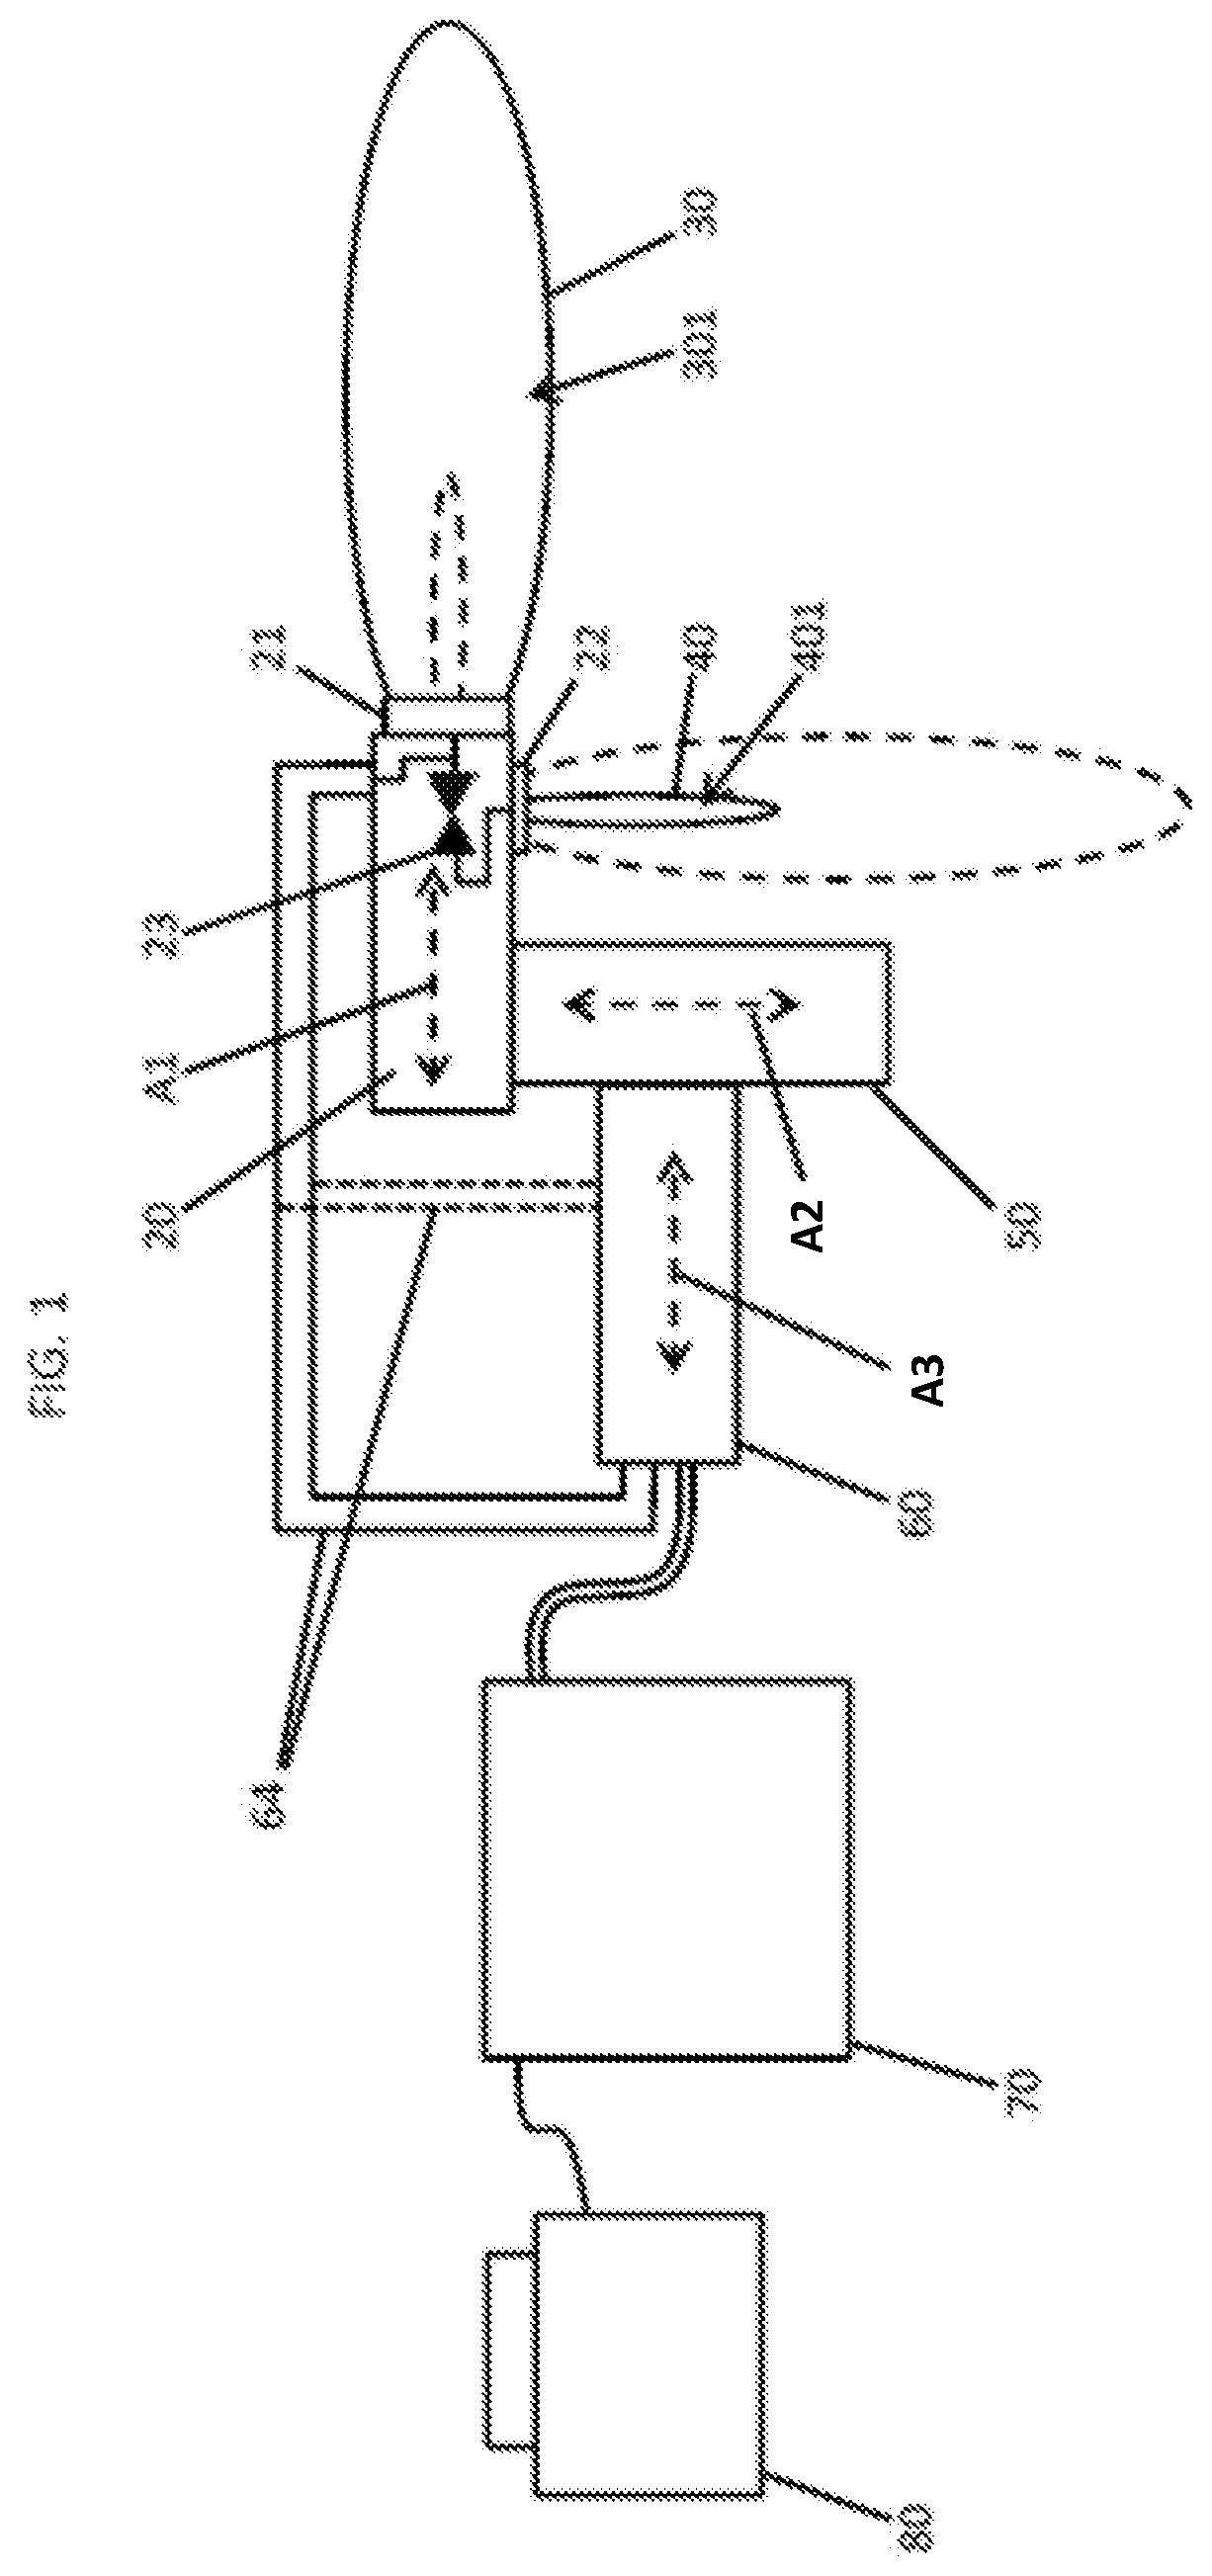 Solenoid valve for inflation system